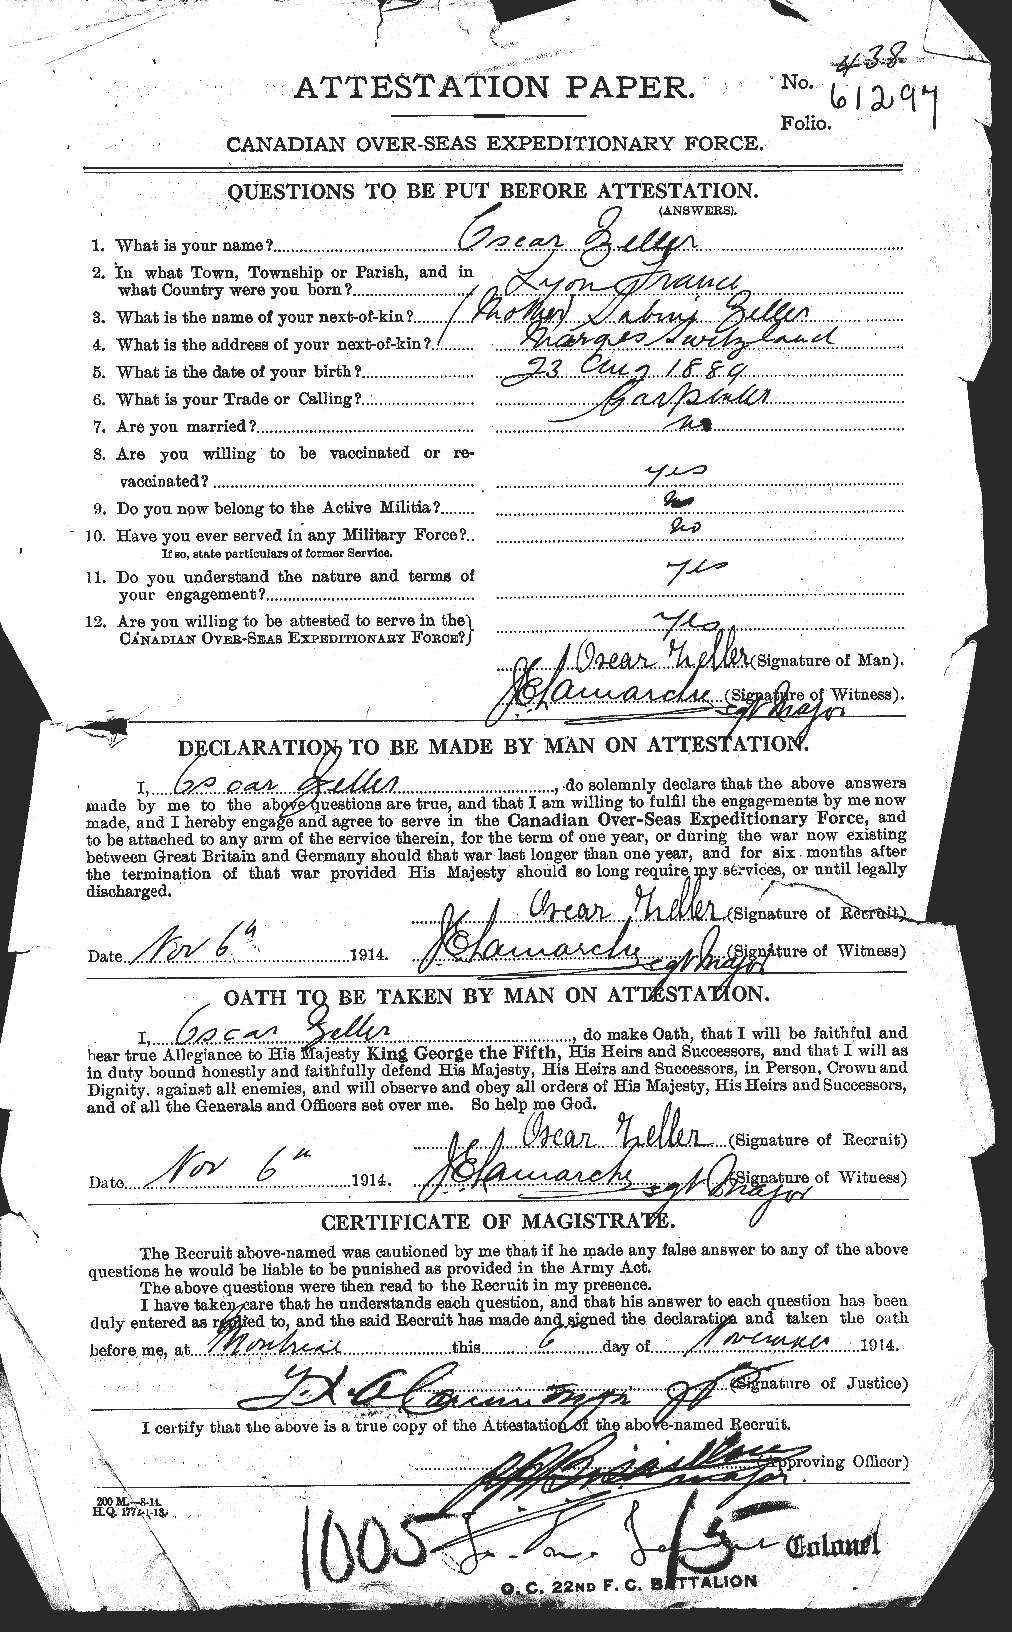 ZELLER, OSCAR, METRAS, EDMOND (AKA) 1889-08-23